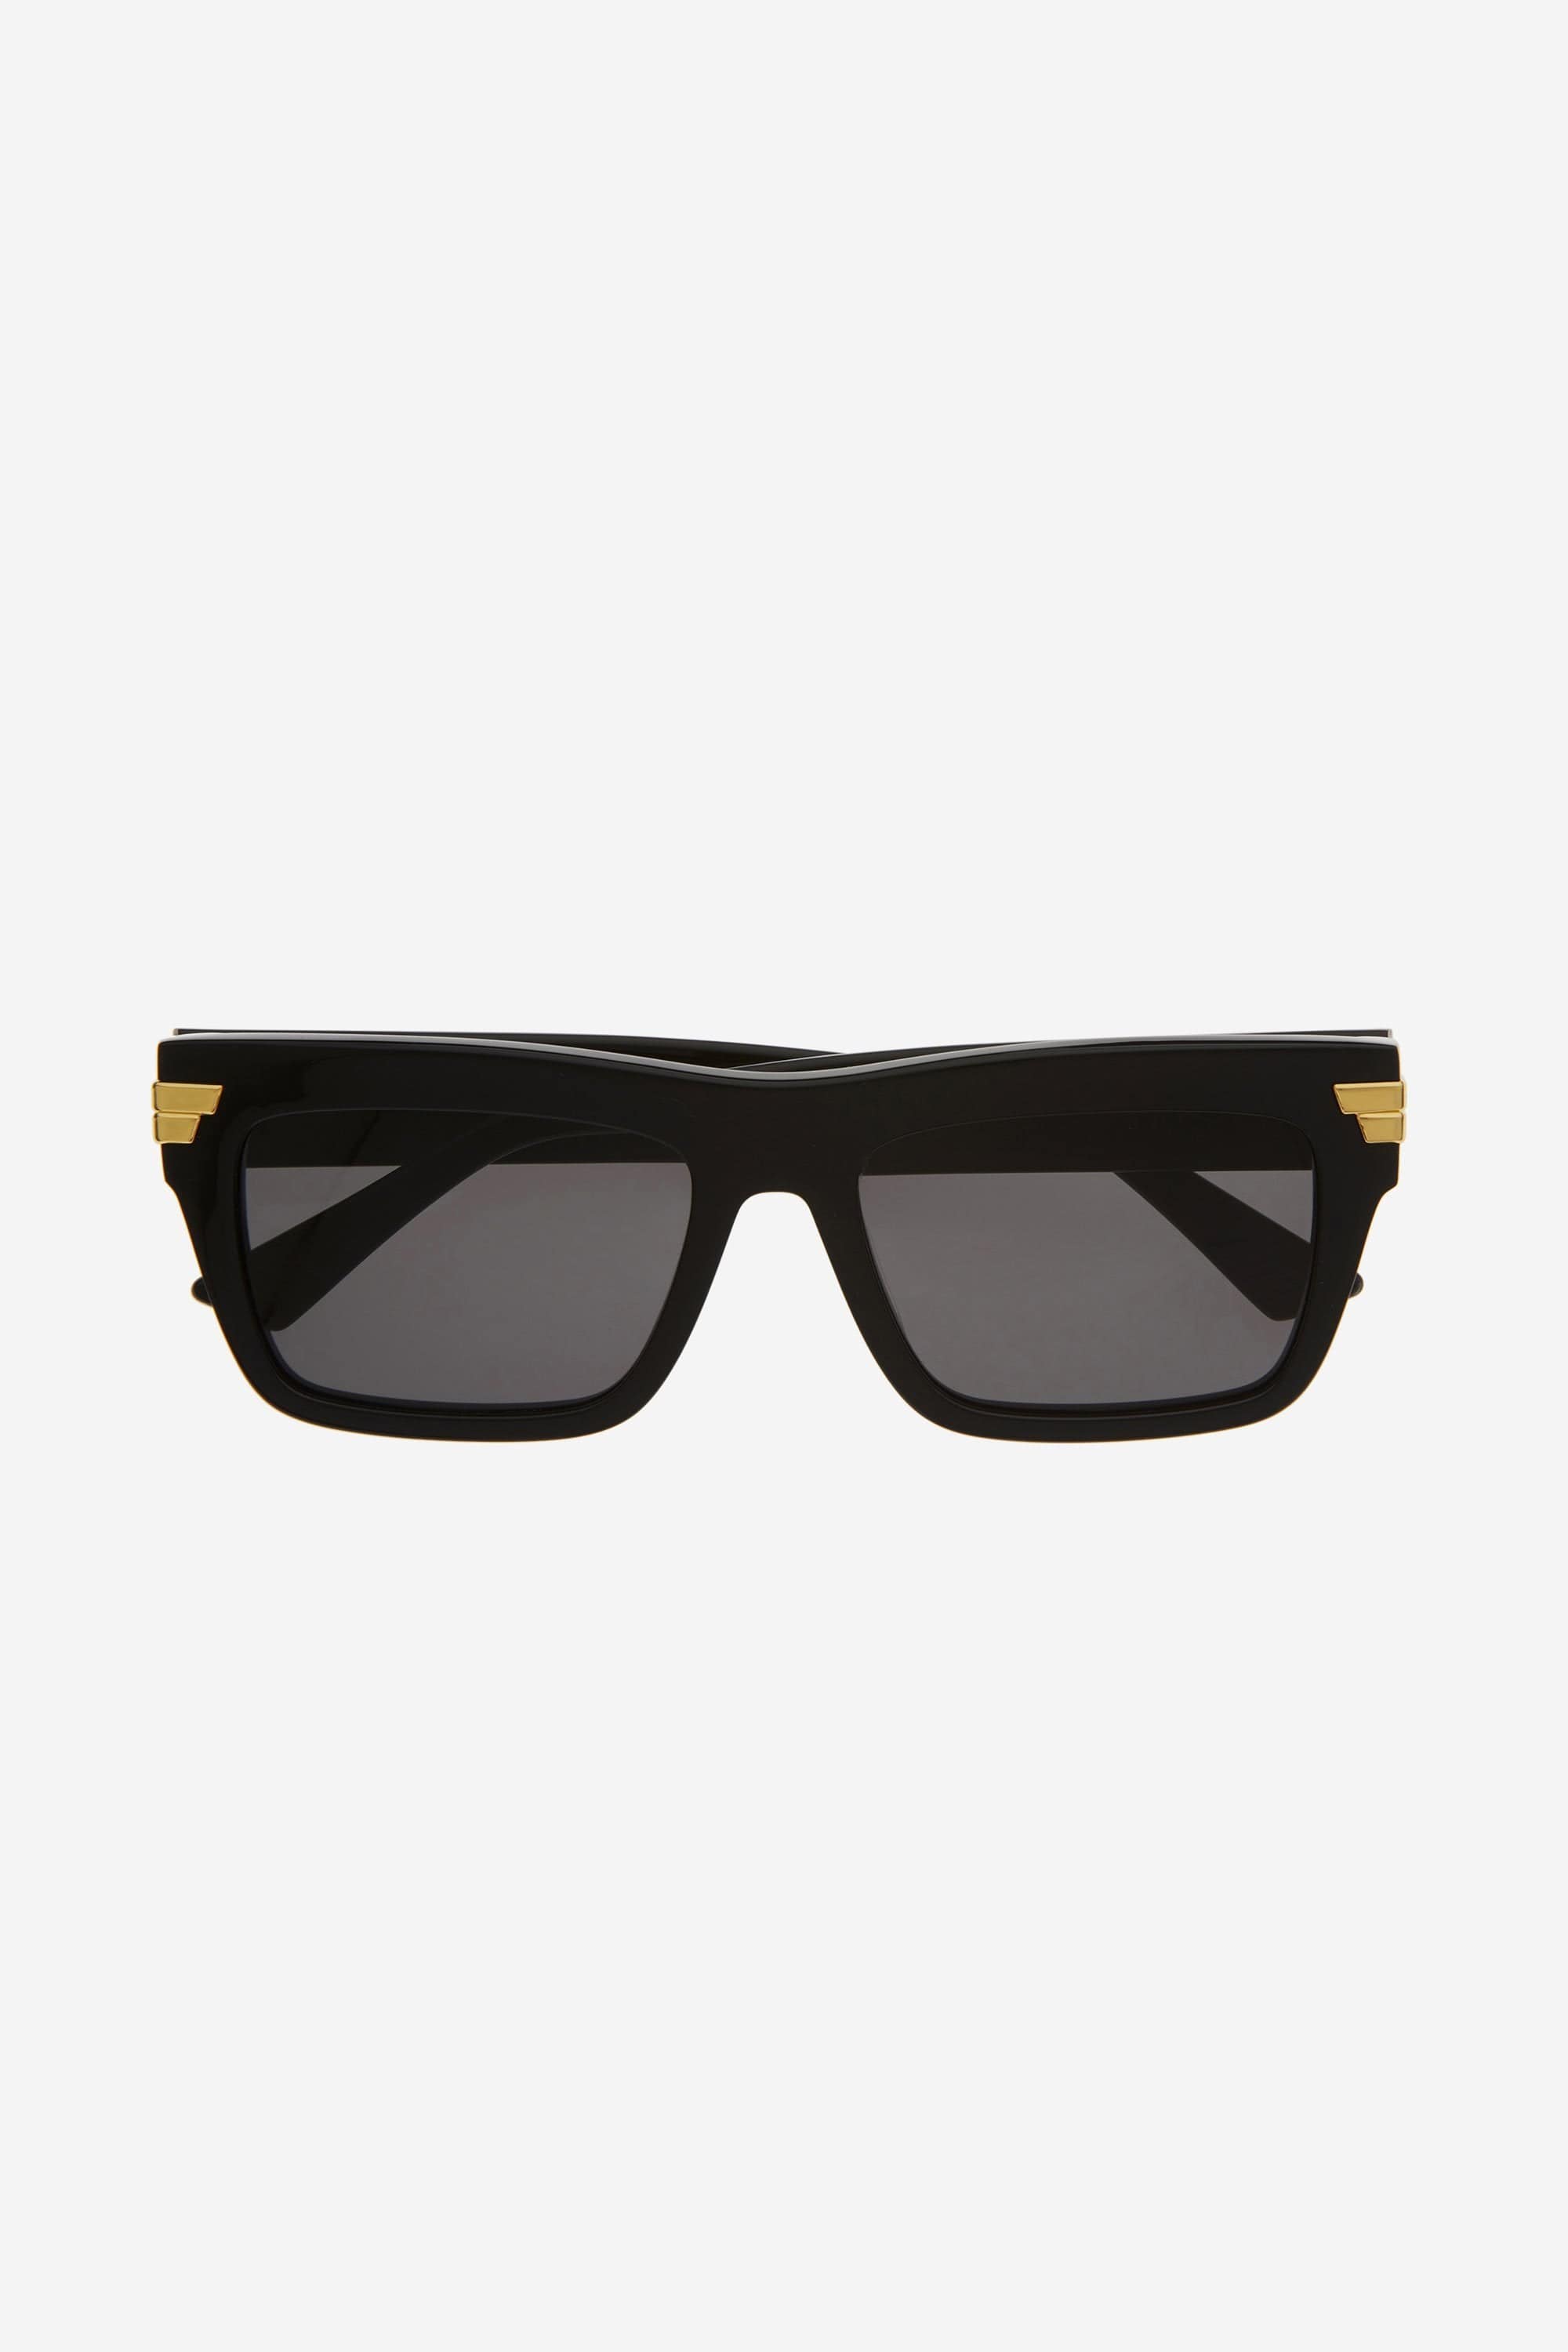 Bottega Veneta UNISEX squared bold black acetate sunglasses - Eyewear Club